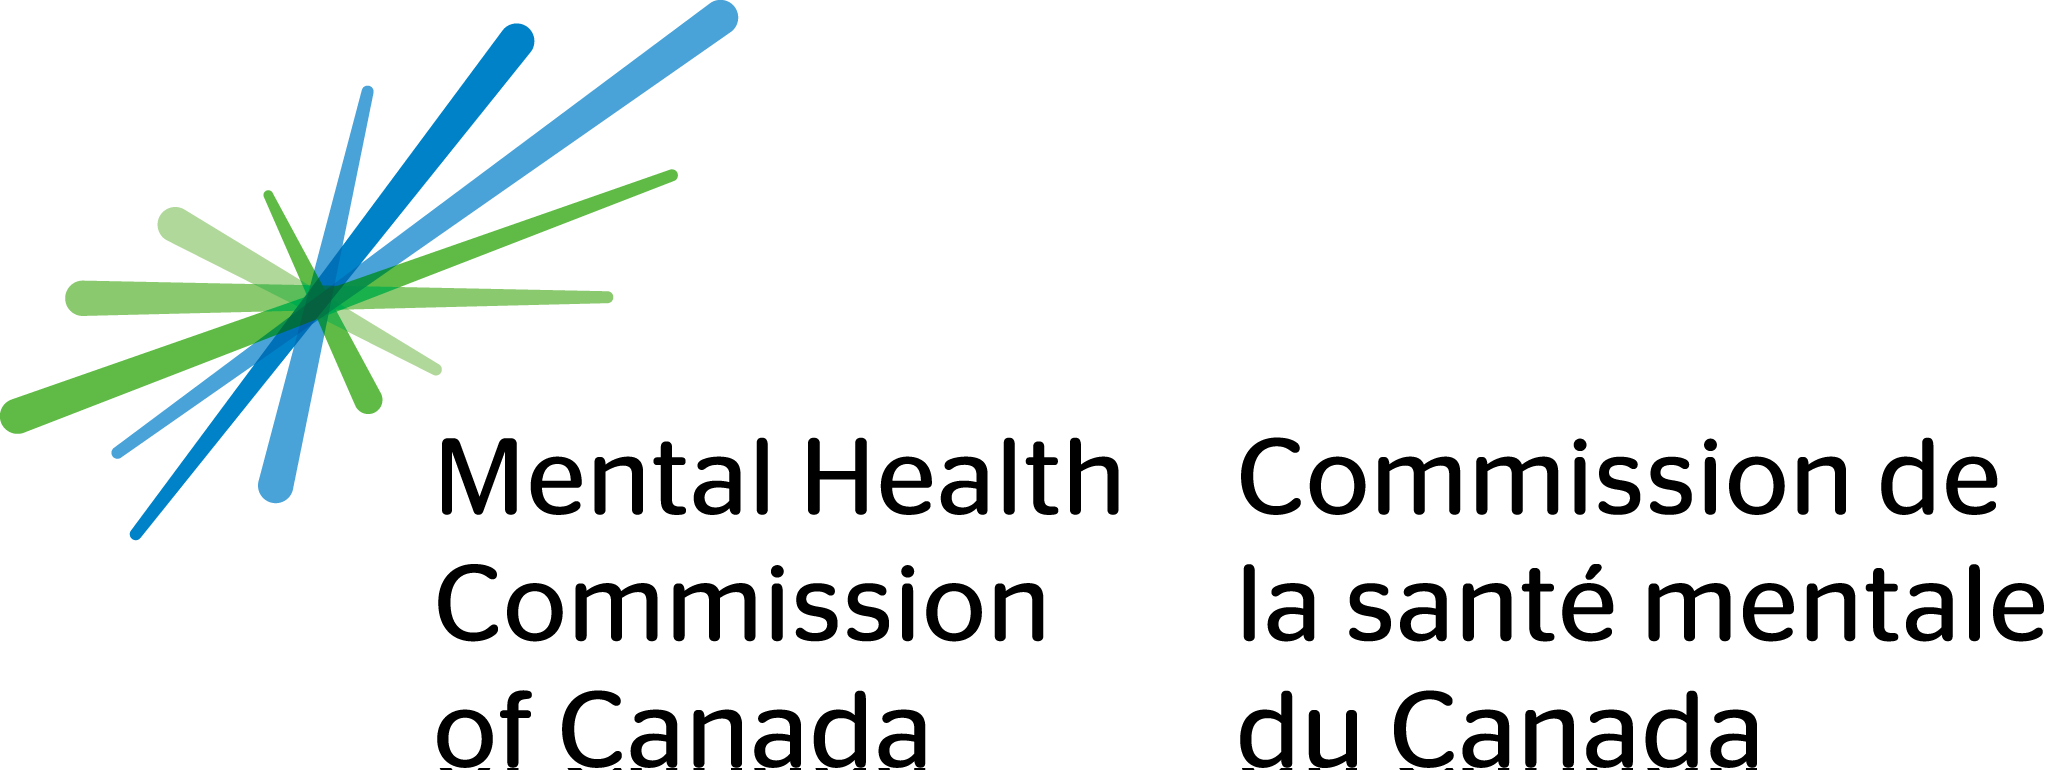 Mental Health Commission of Canada Logo